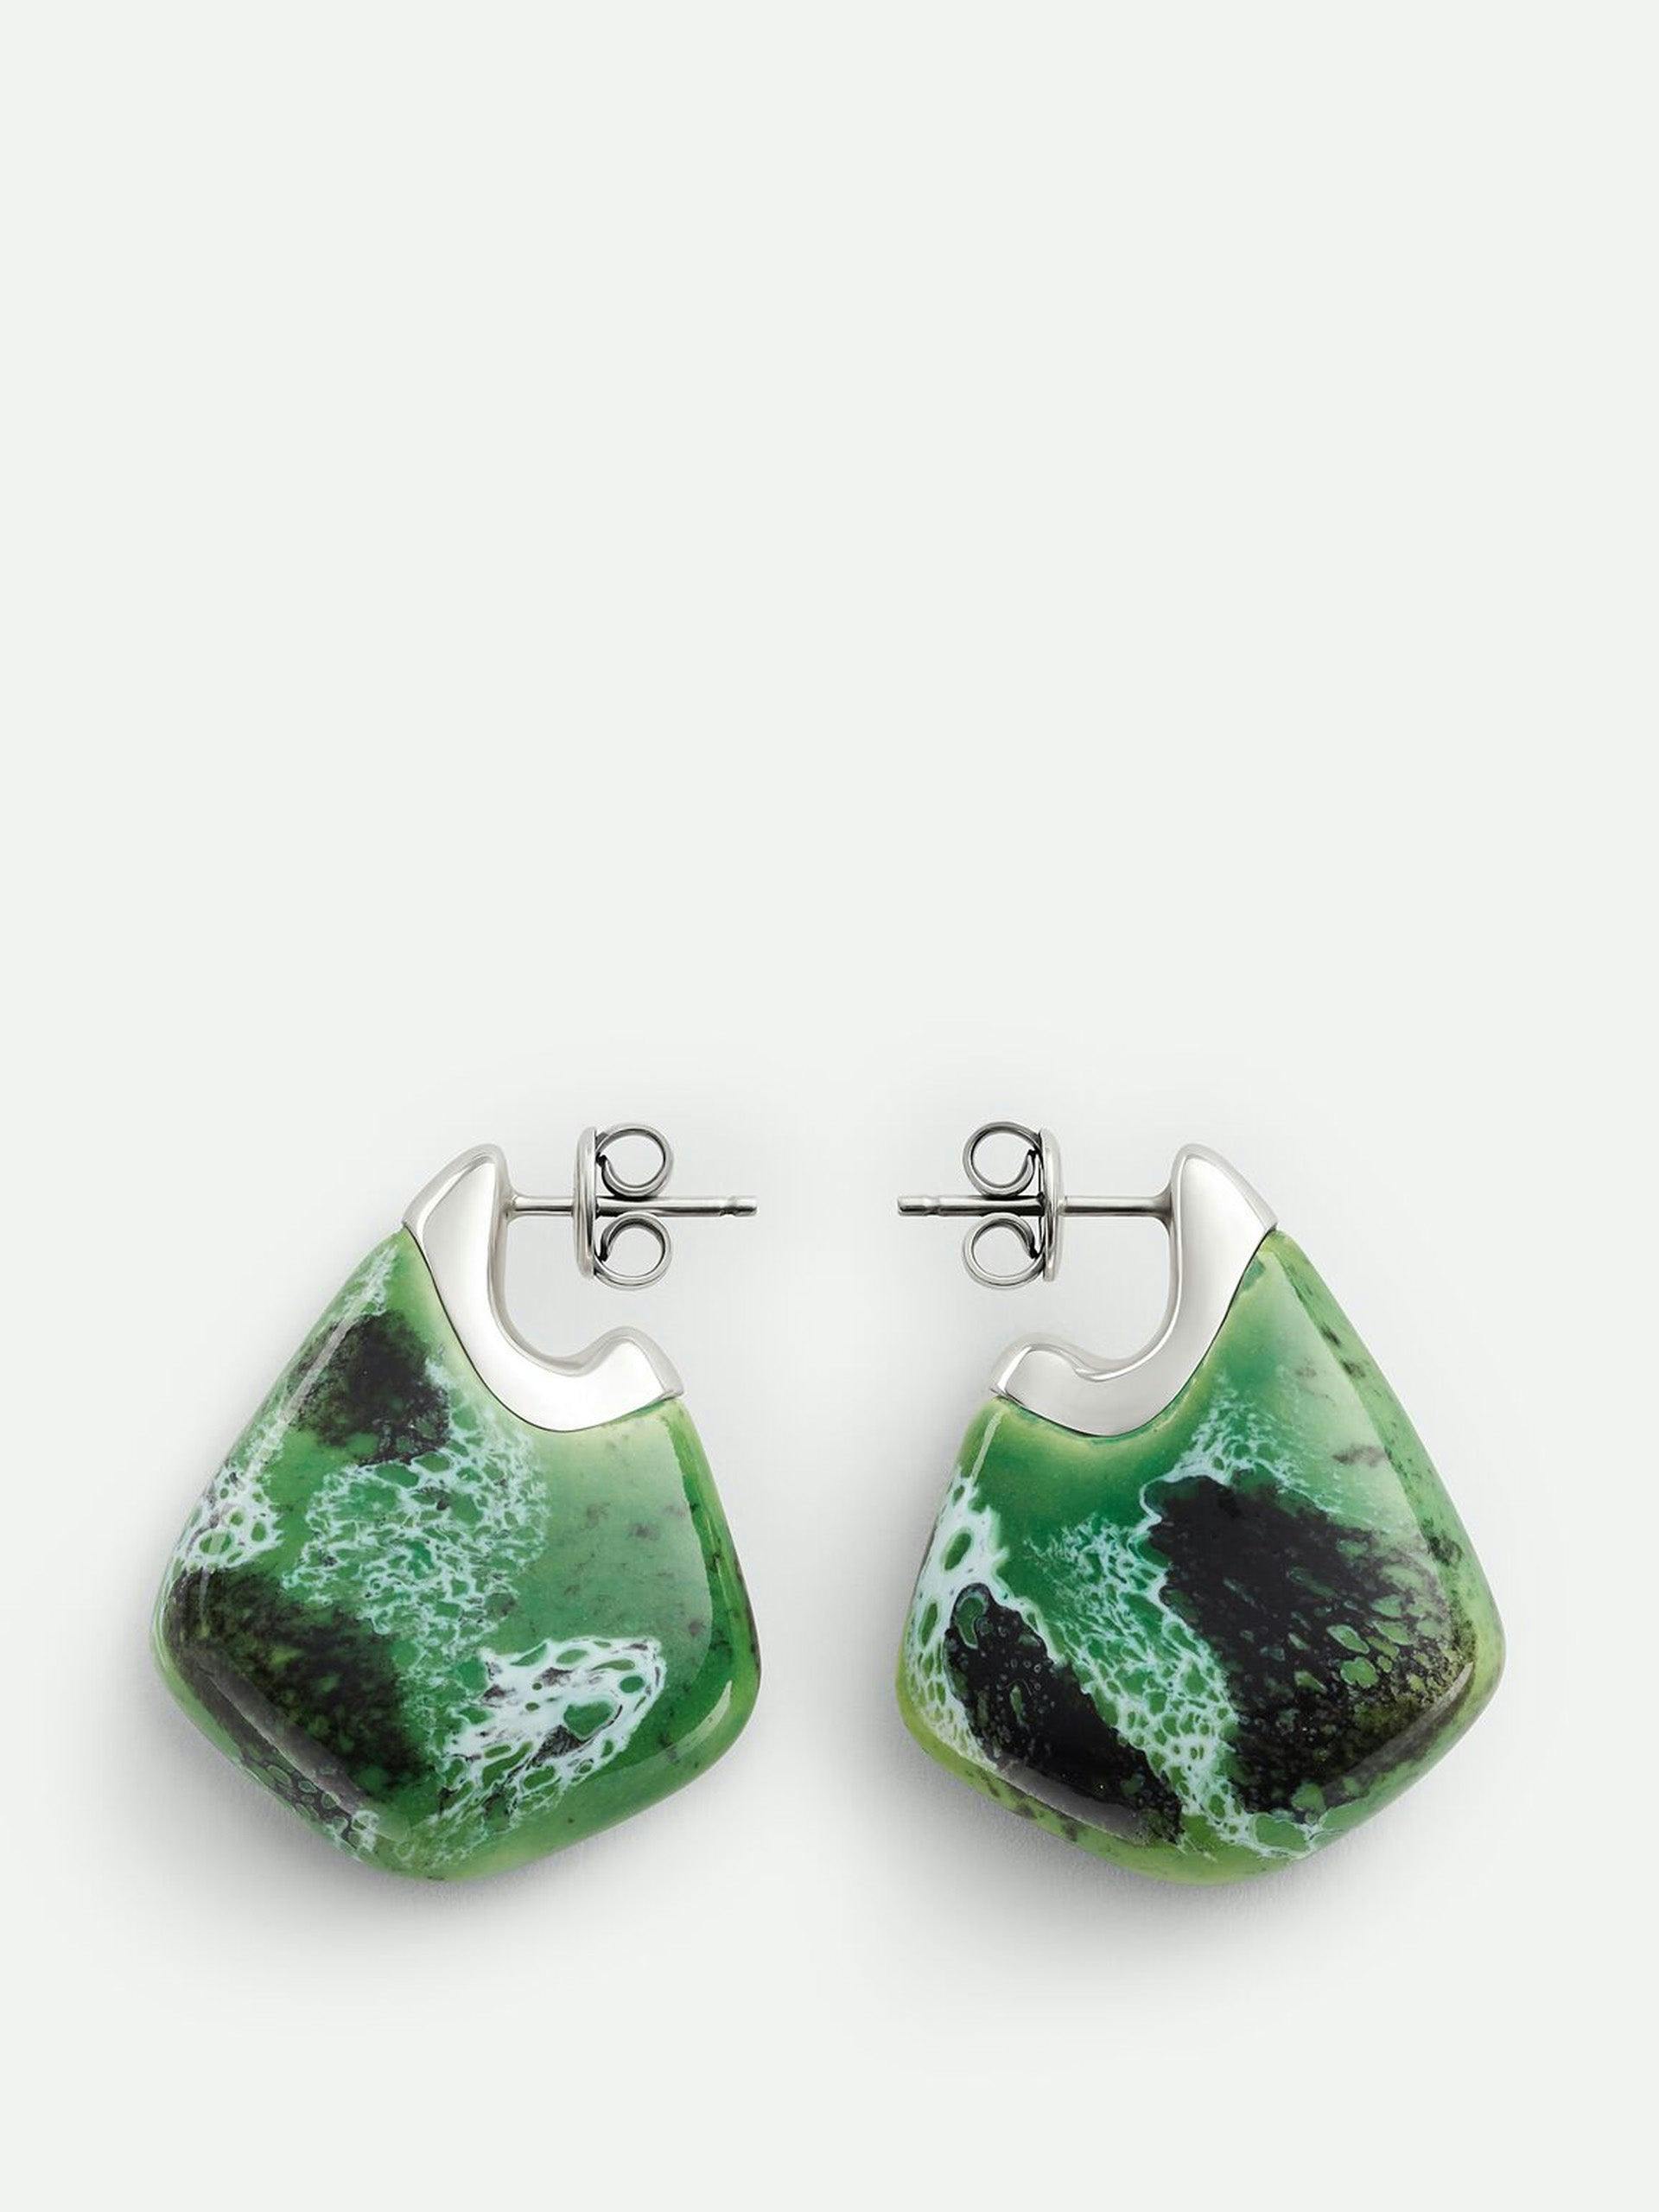 Small Fin ceramic earrings